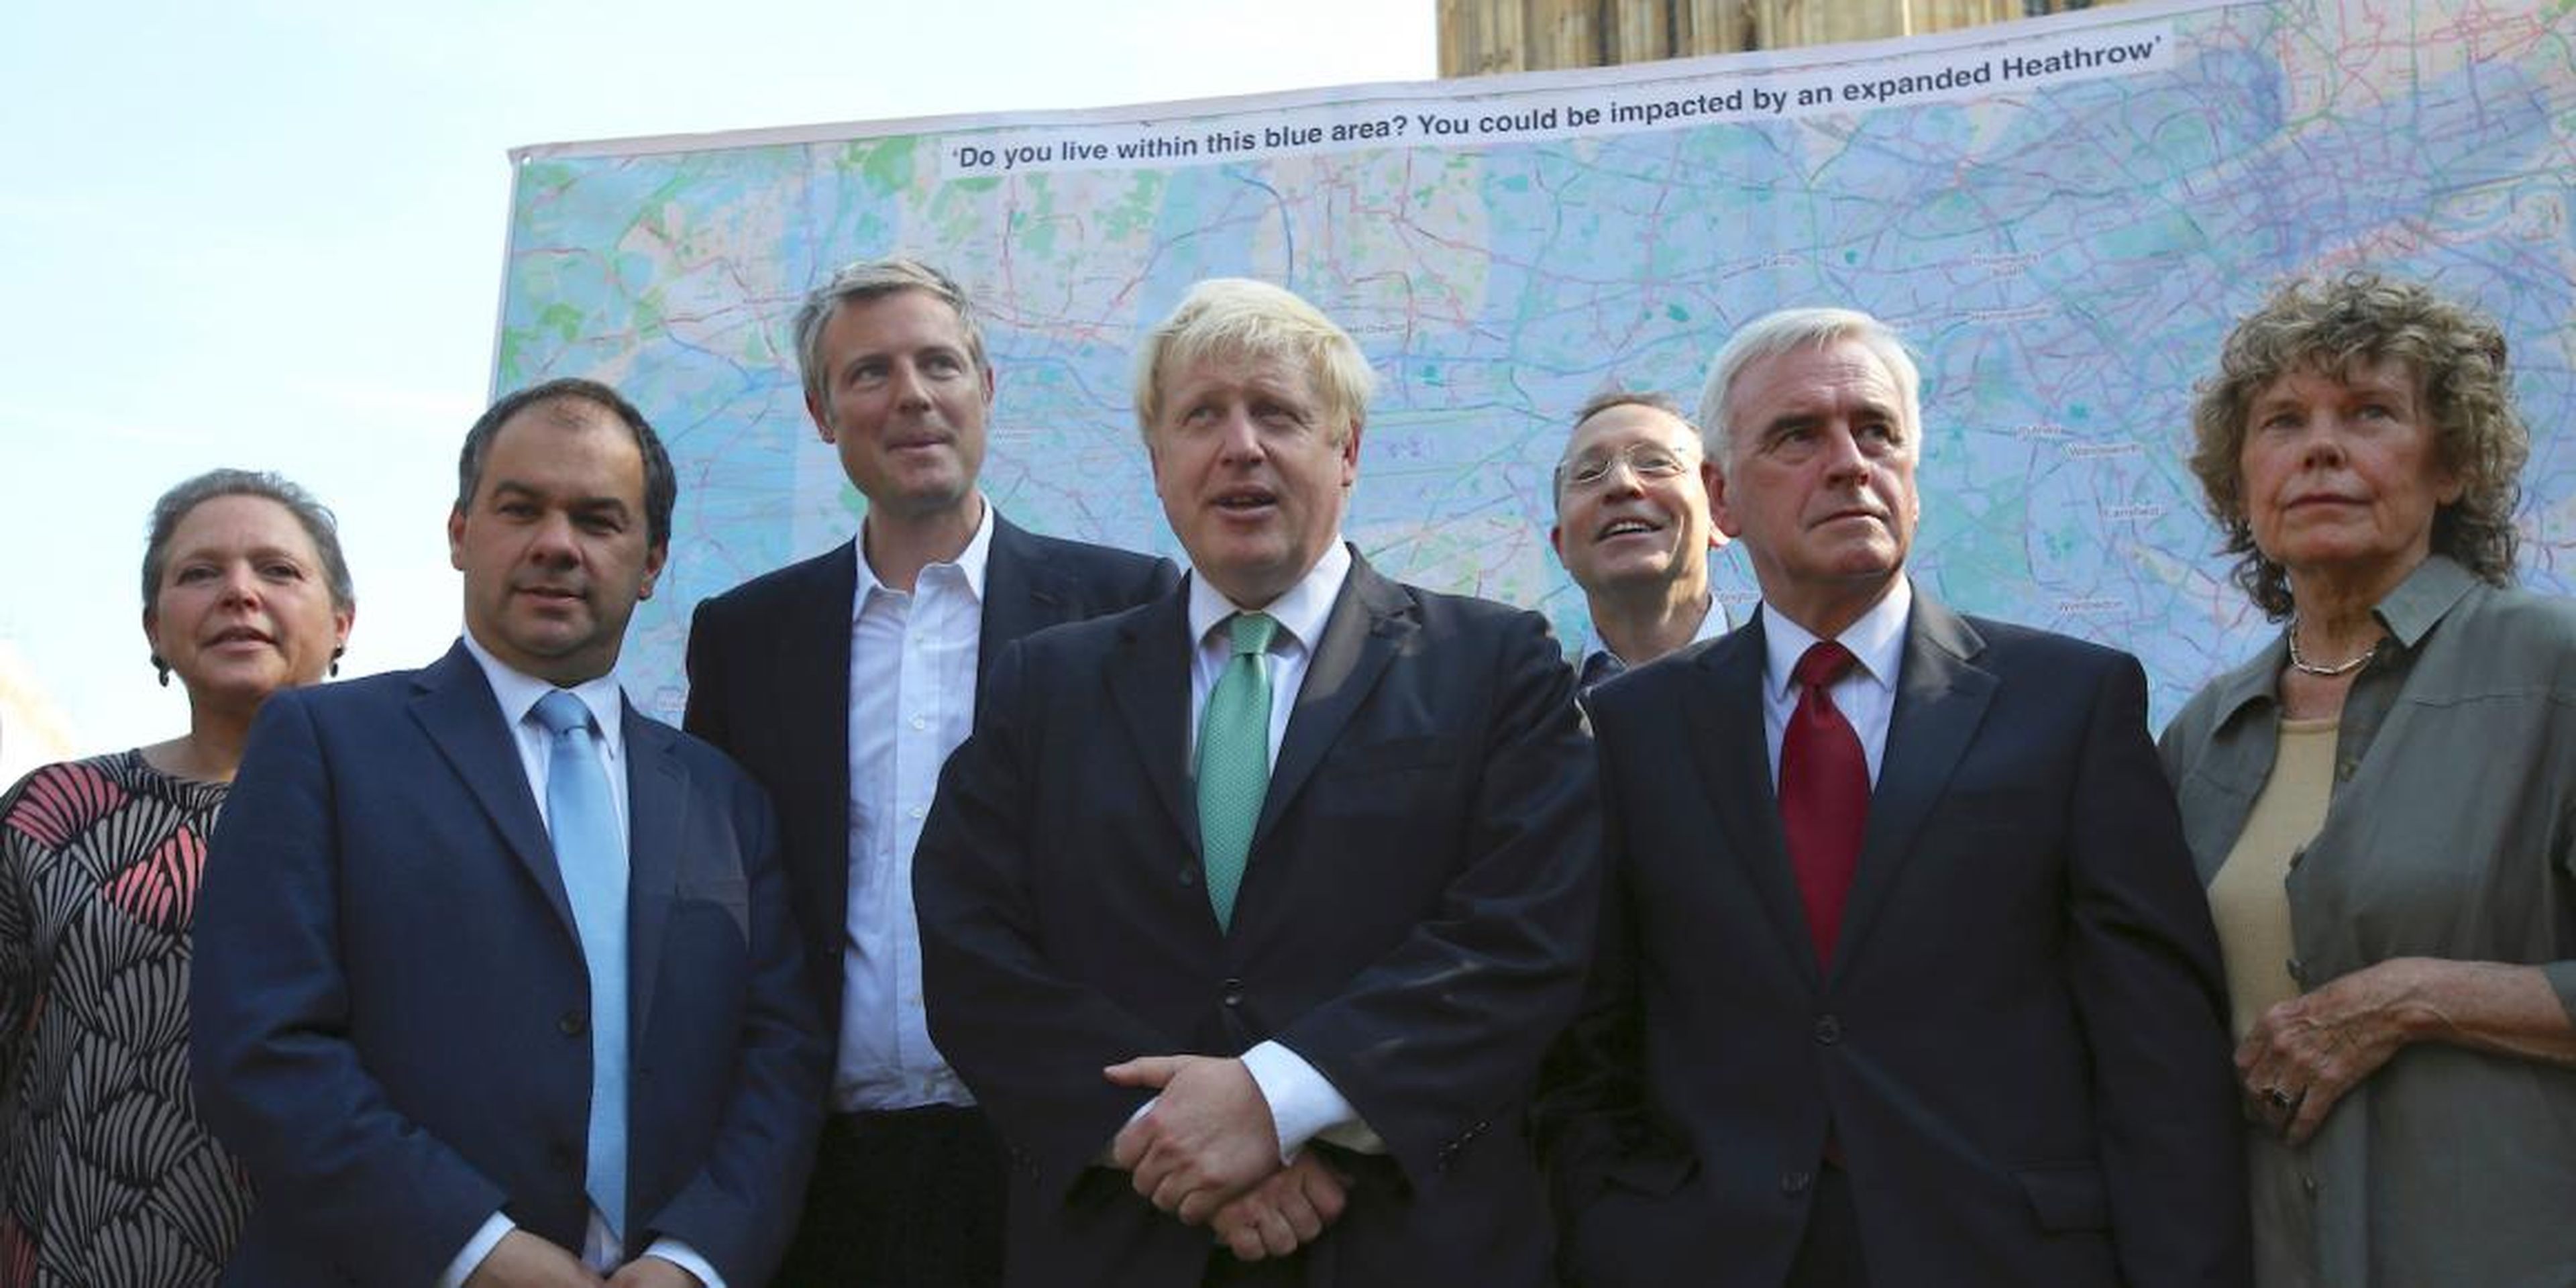 Boris Johnson campaigning against Heathrow expansion